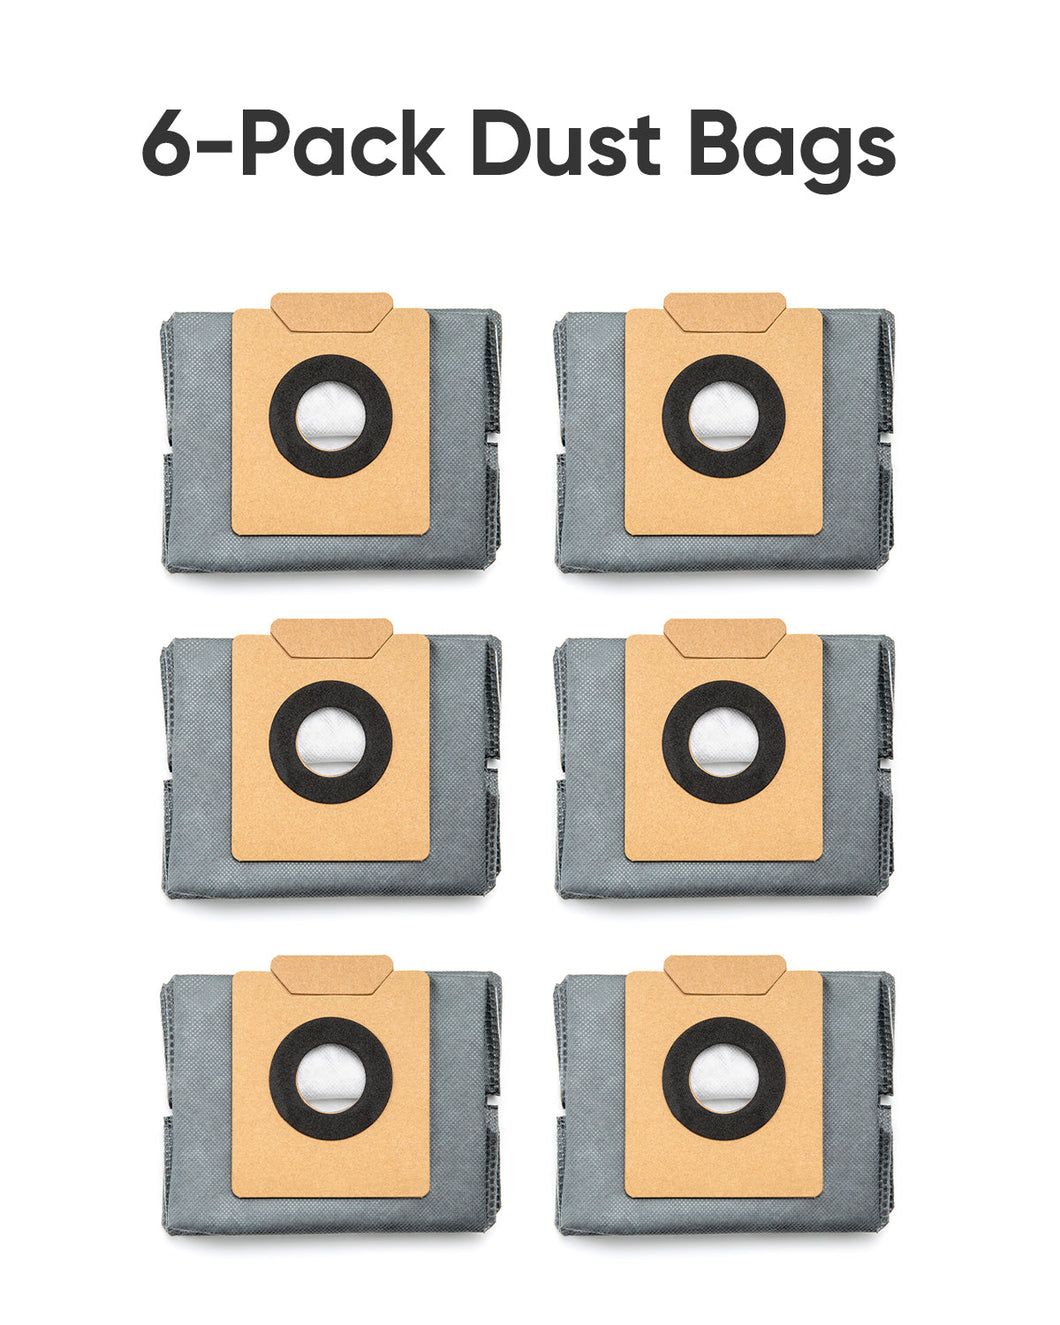 6-Pack Large Capacity Anti-Bacterial and Deodorizing Dust Bags